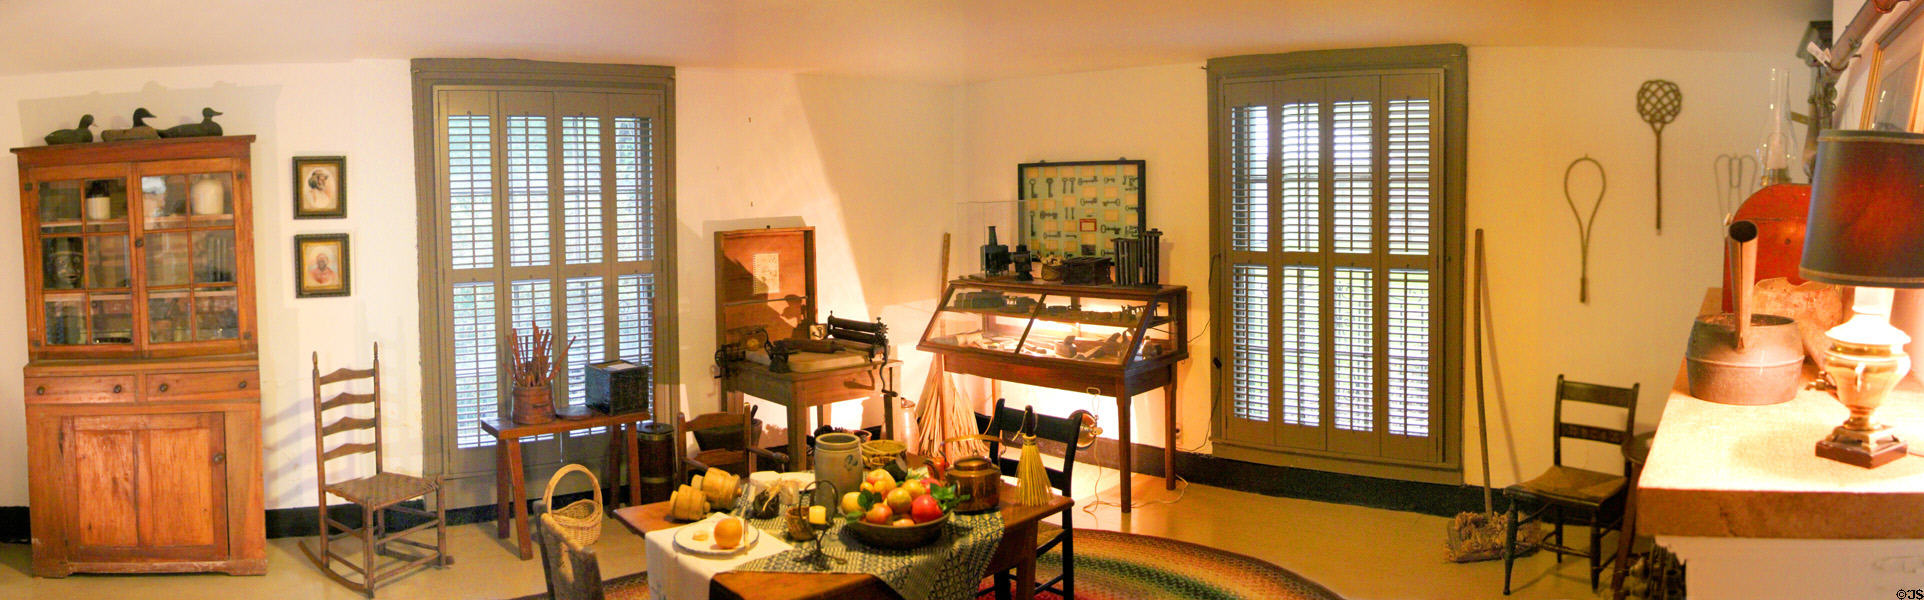 Kitchen panorama at Oakleigh Plantation. Mobile, AL.